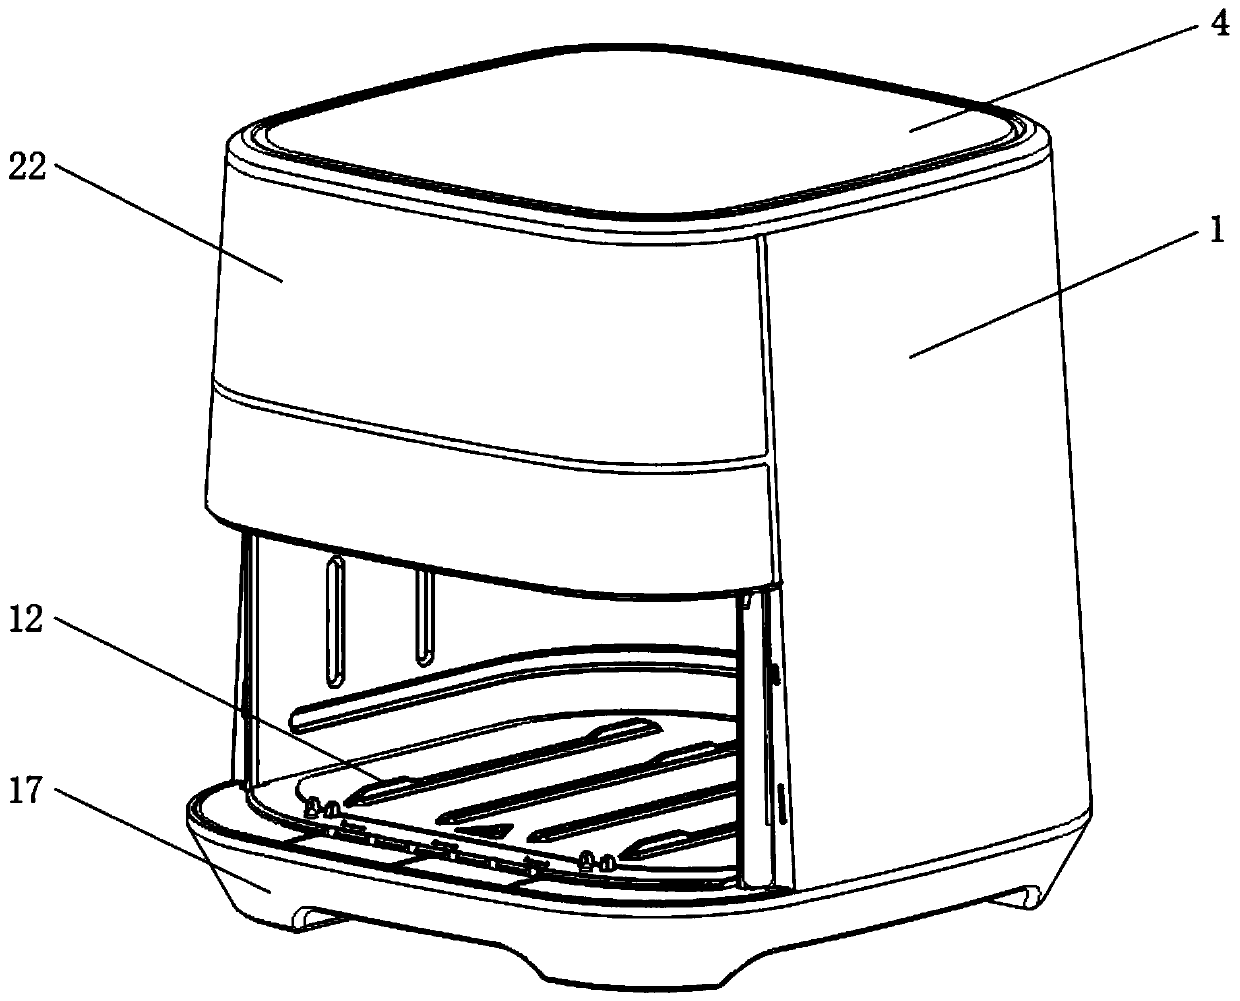 Intelligent multifunctional air baking oven